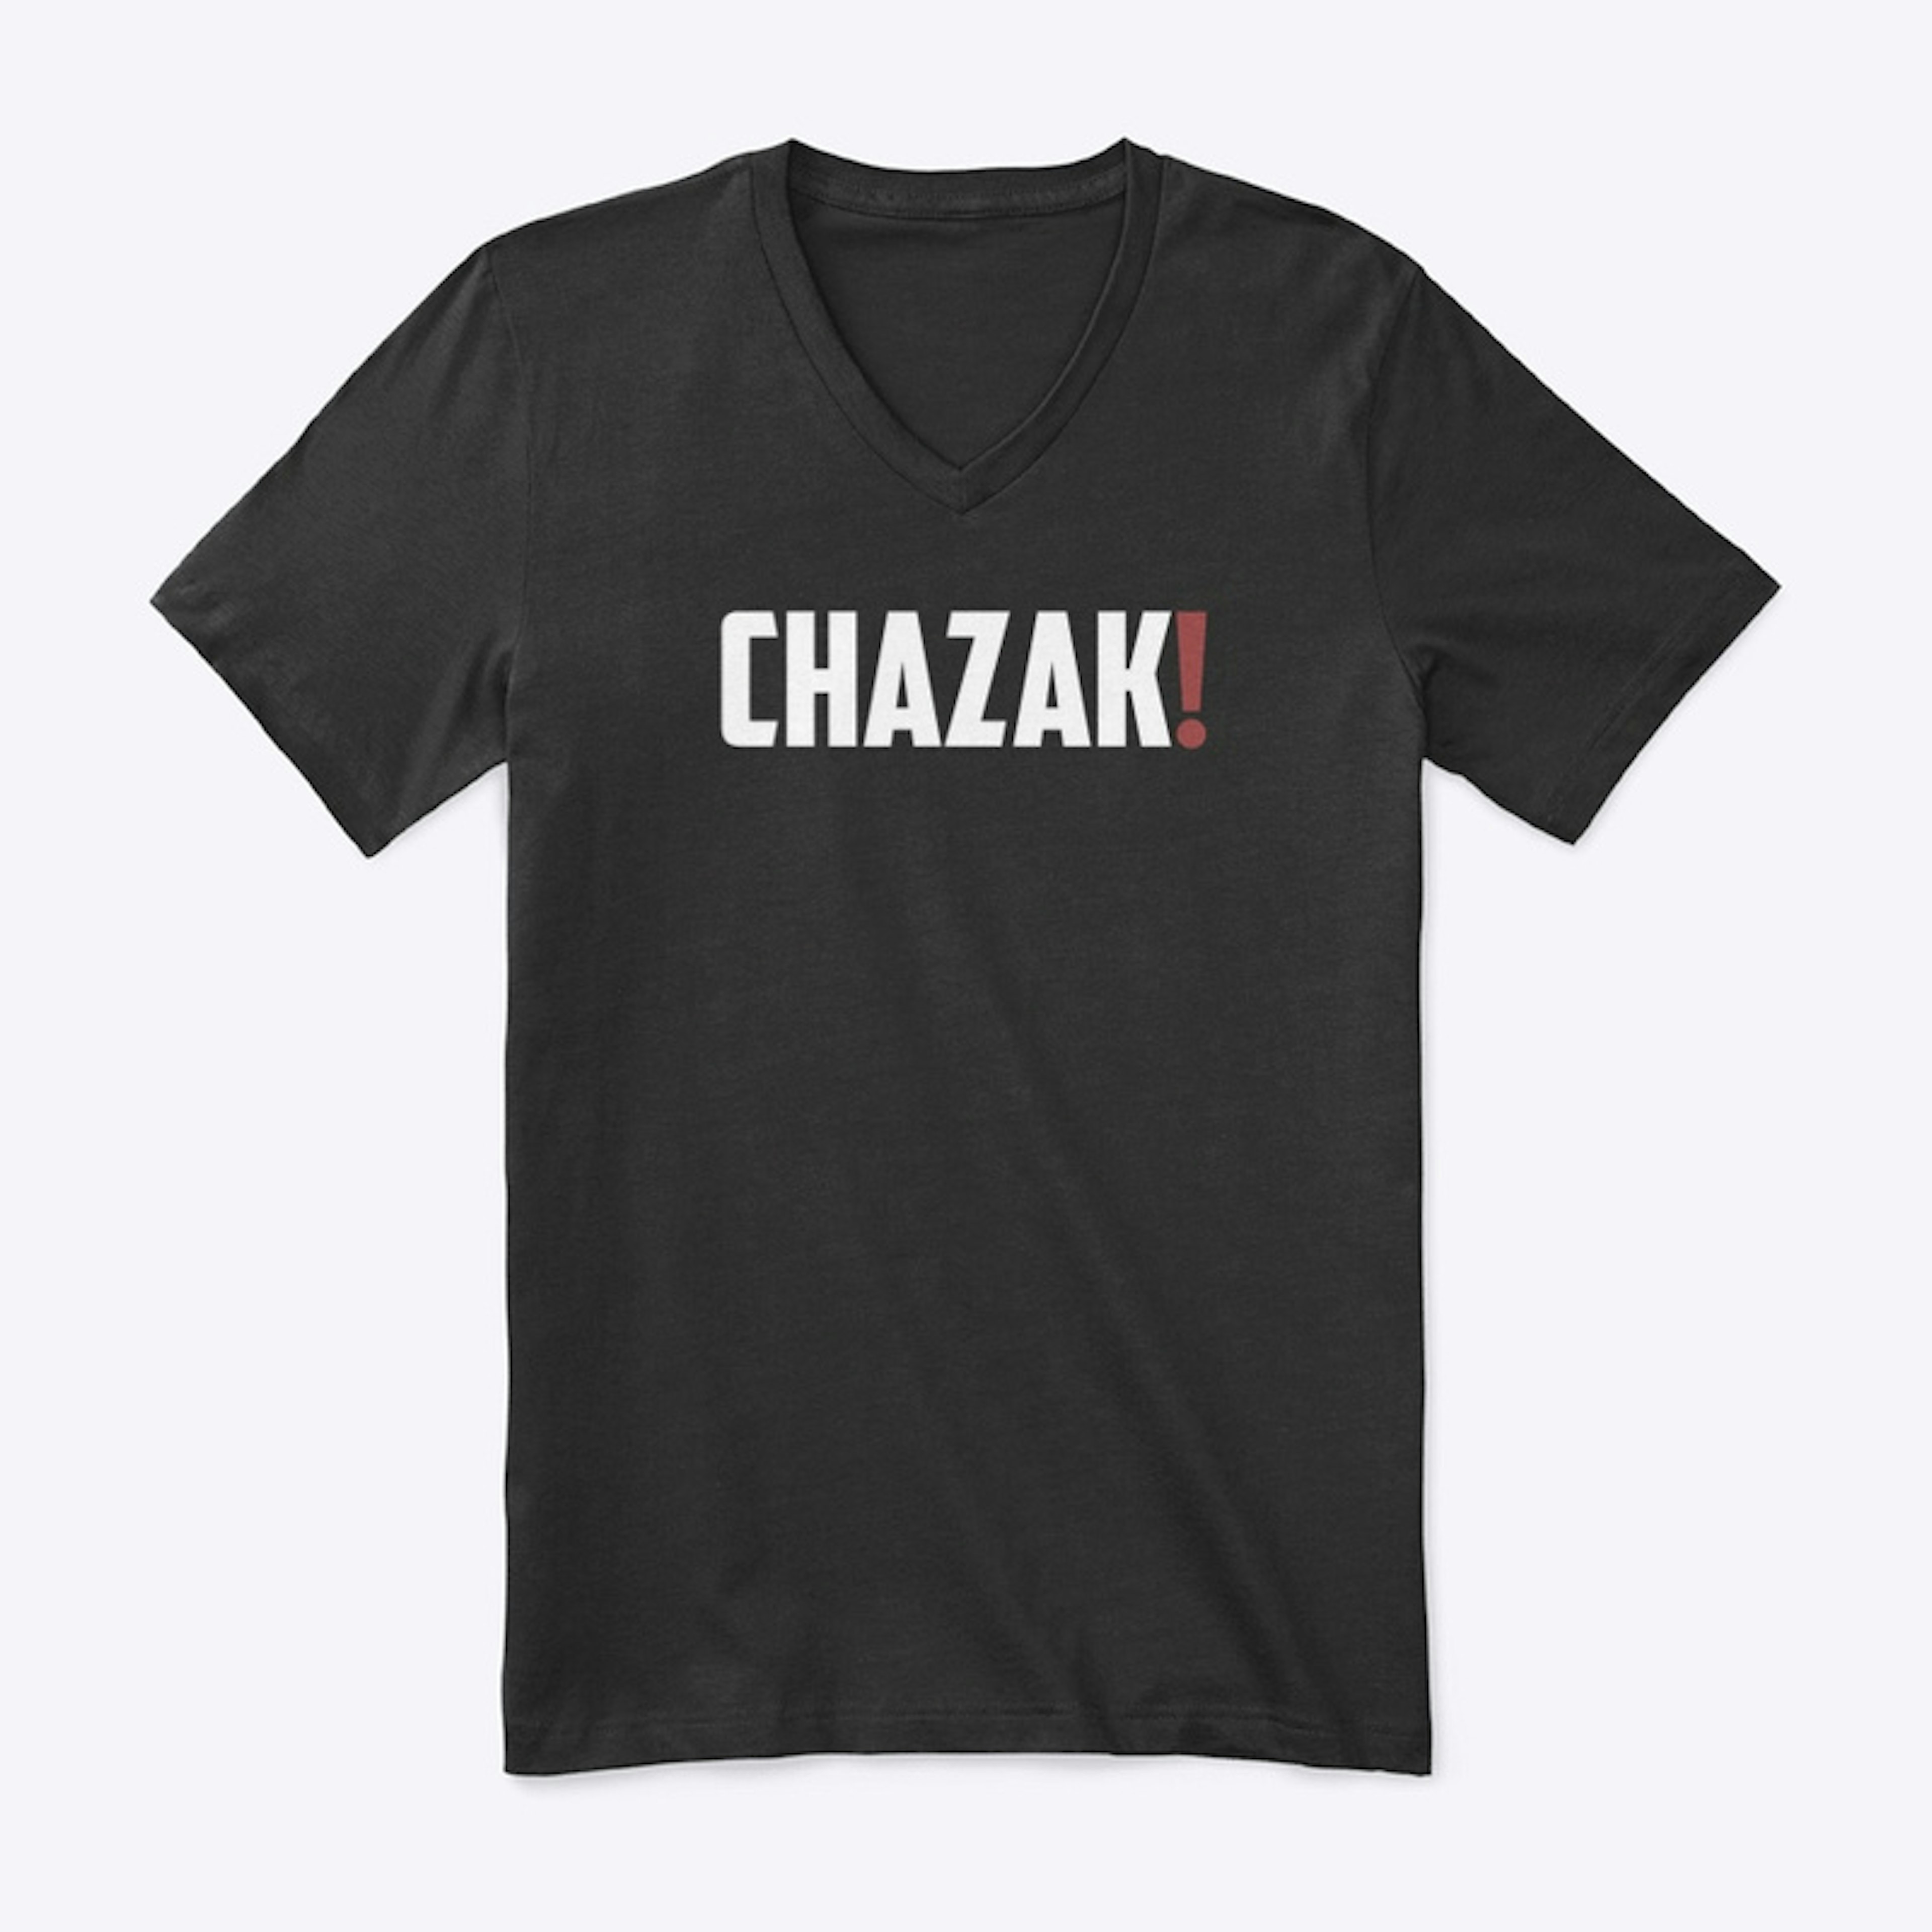 Chazak!